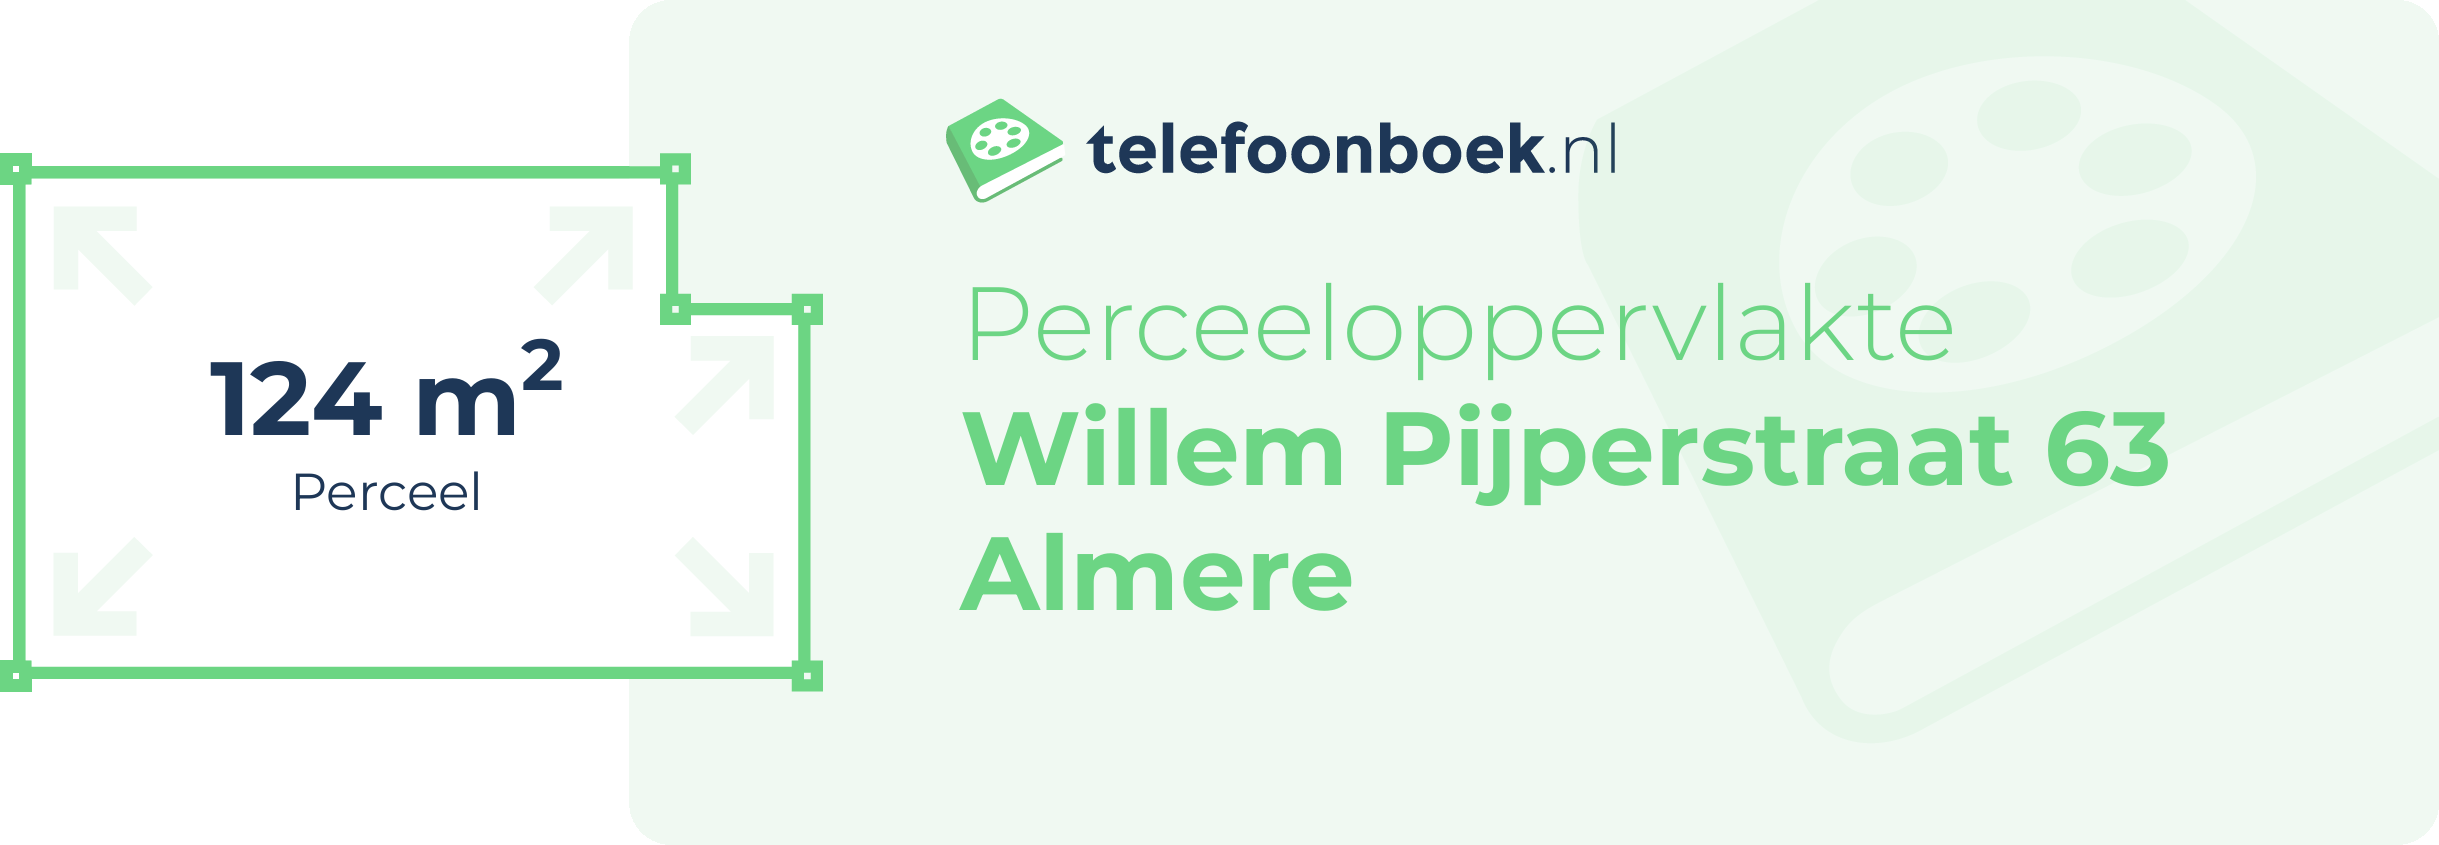 Perceeloppervlakte Willem Pijperstraat 63 Almere